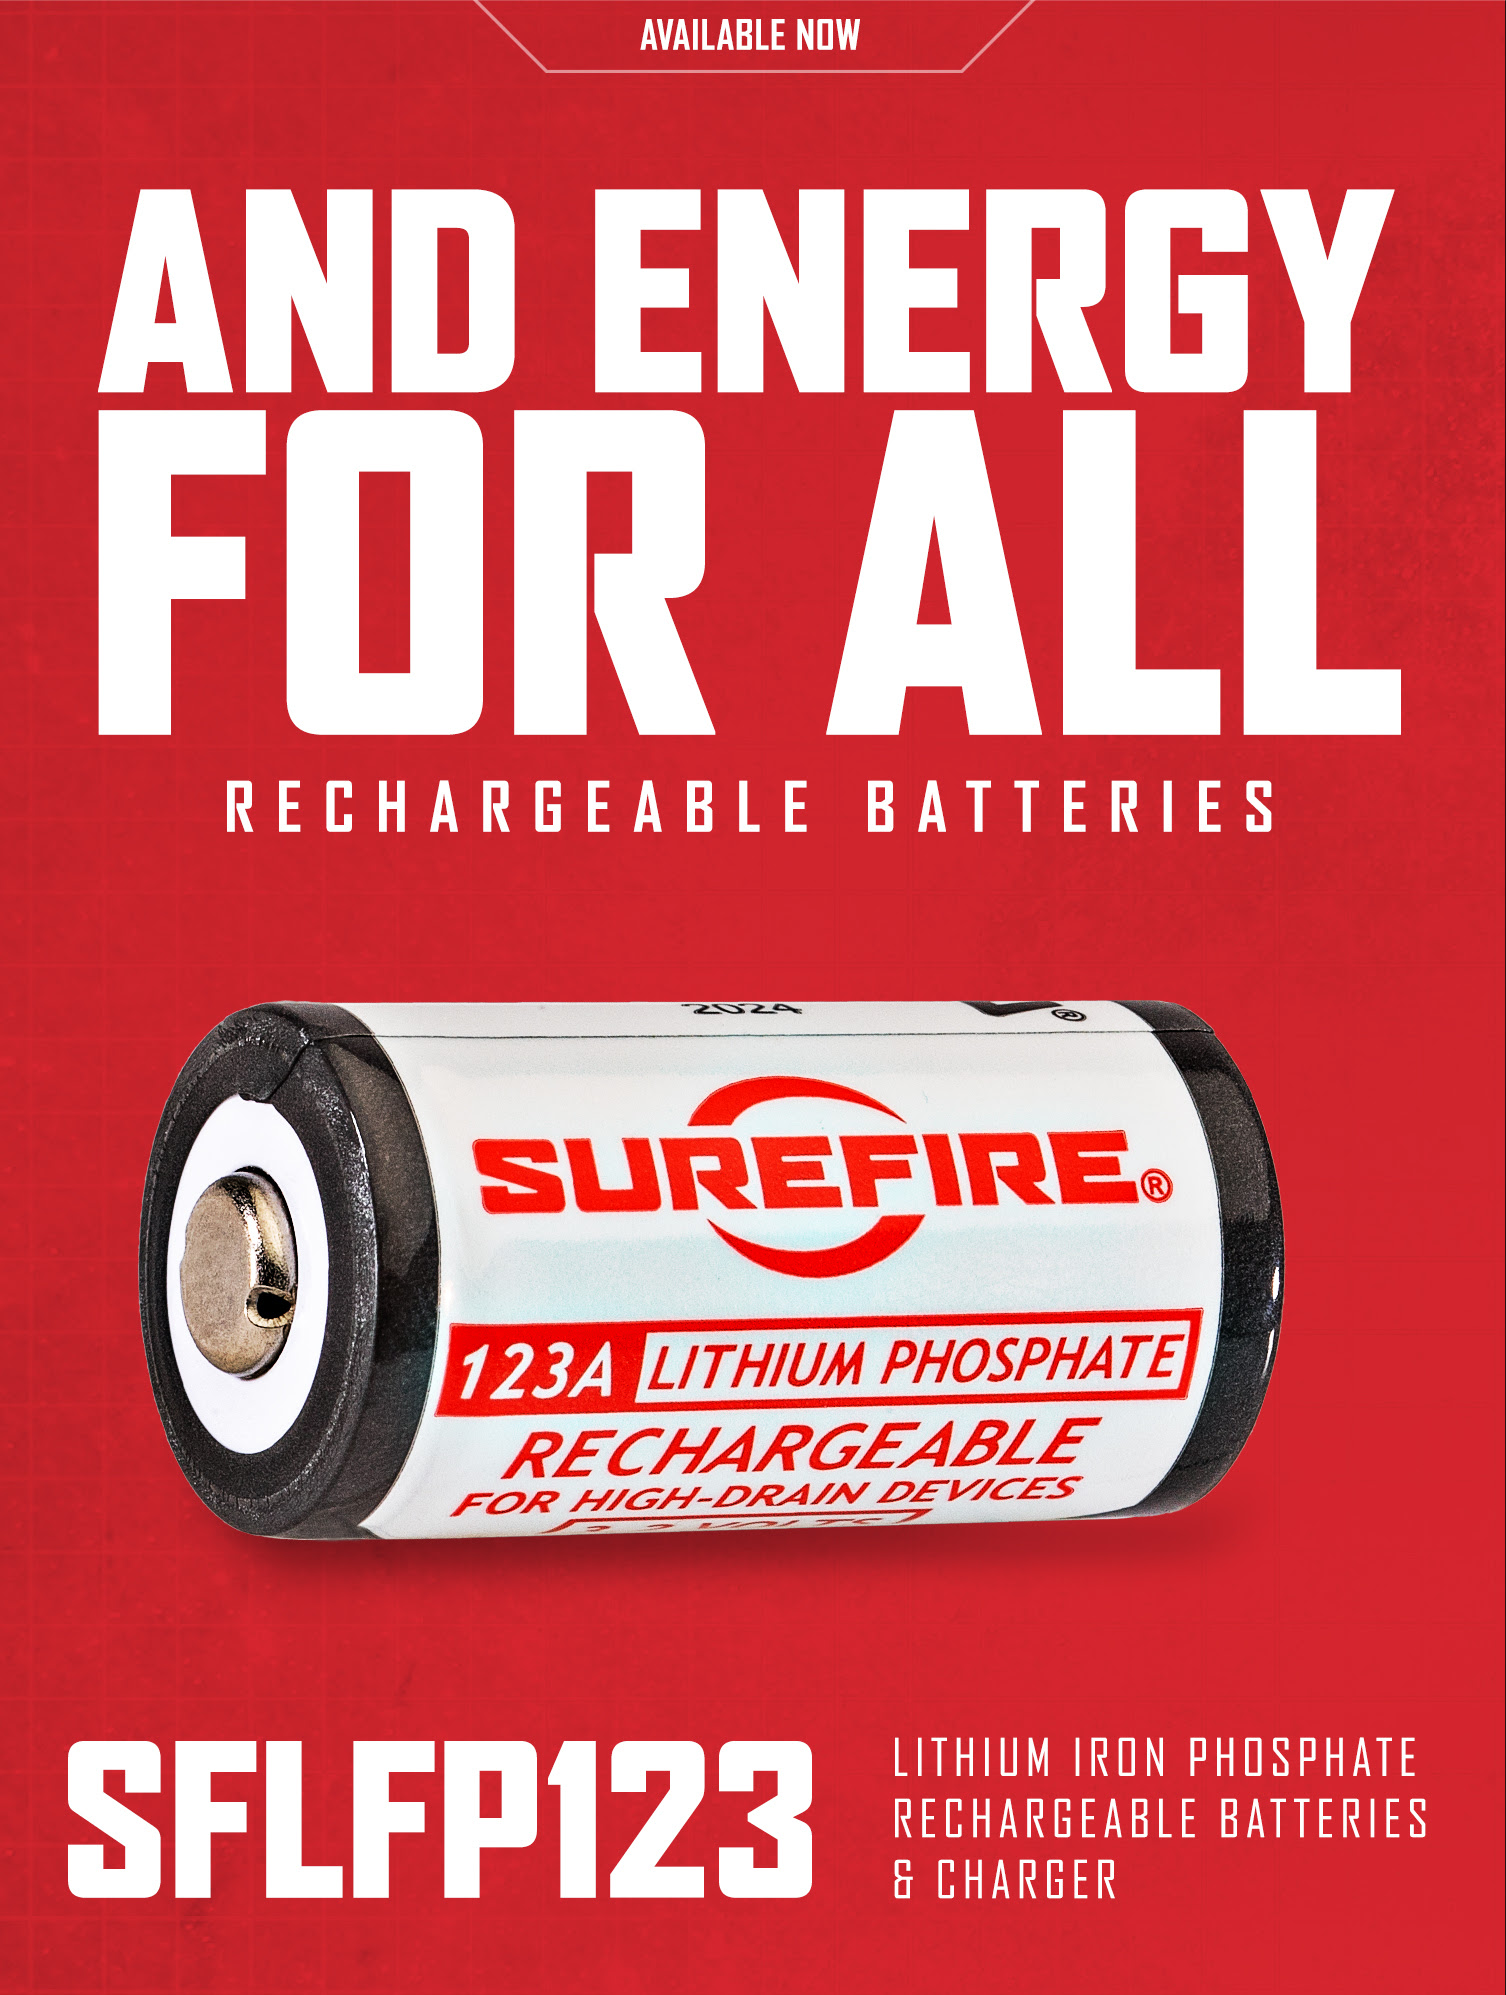 SFLFP123 Batteries - SureFire